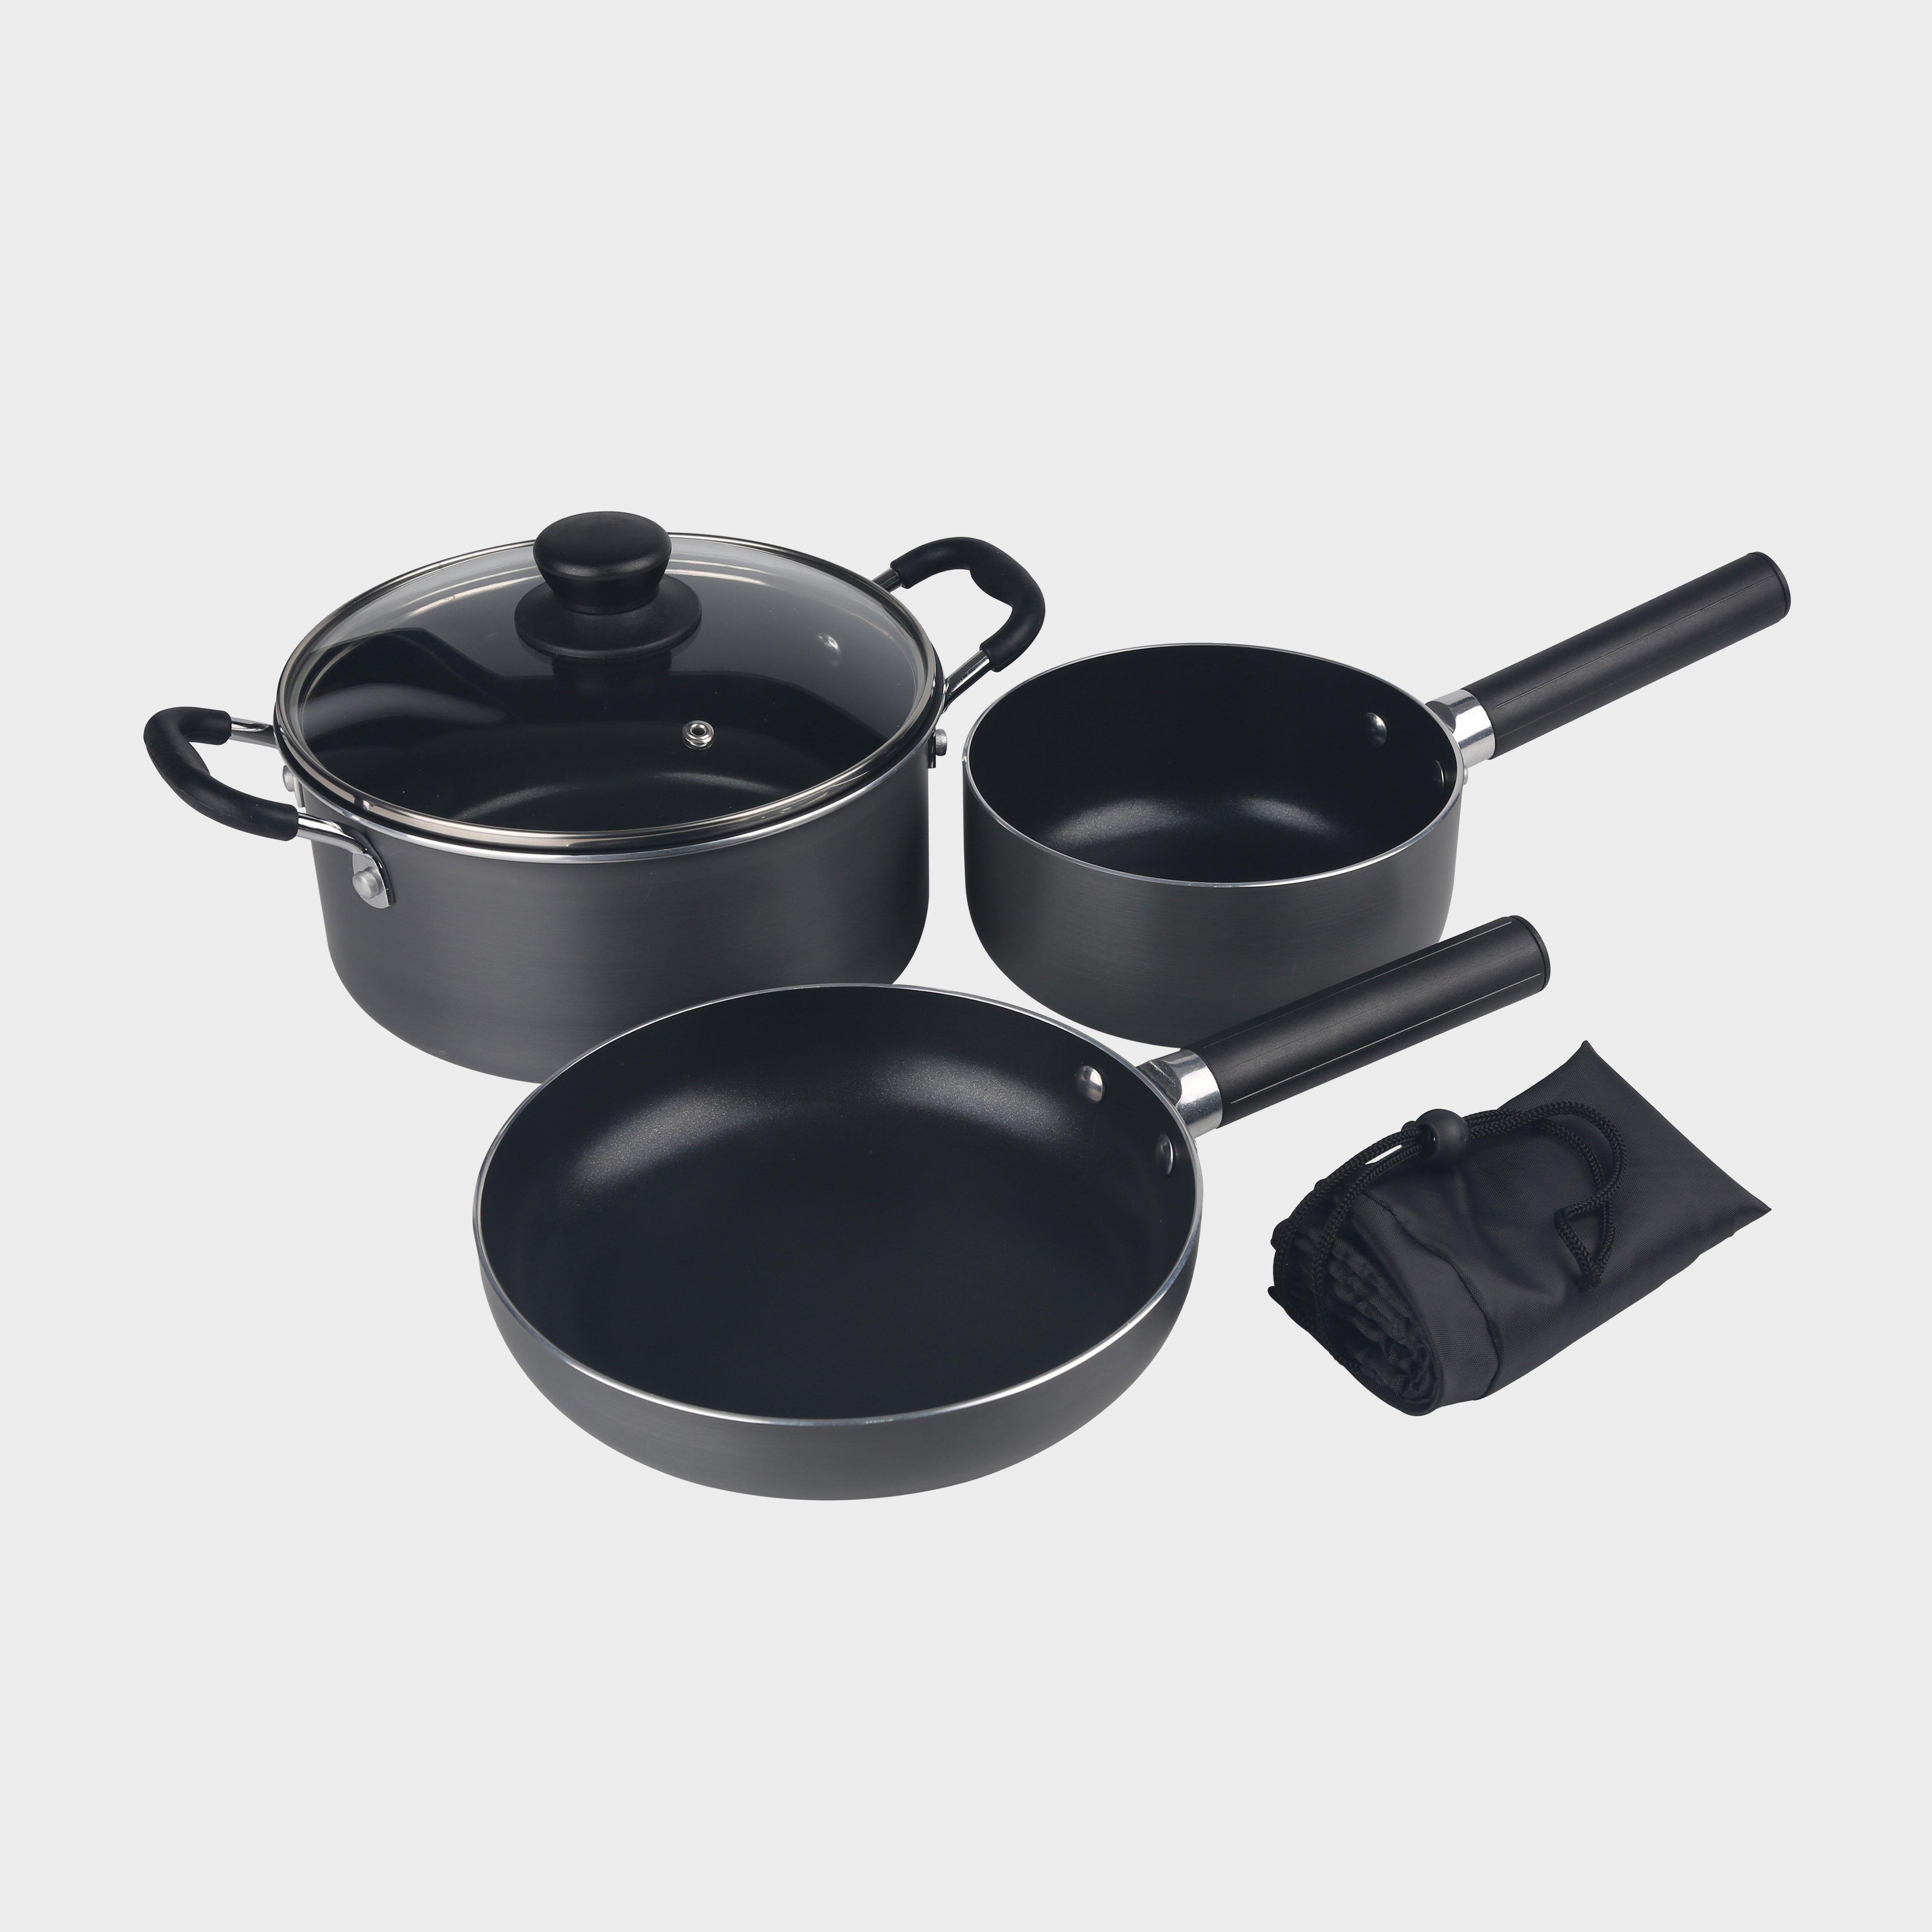 Hi-gear Family Cookset - Black/slv  Black/slv